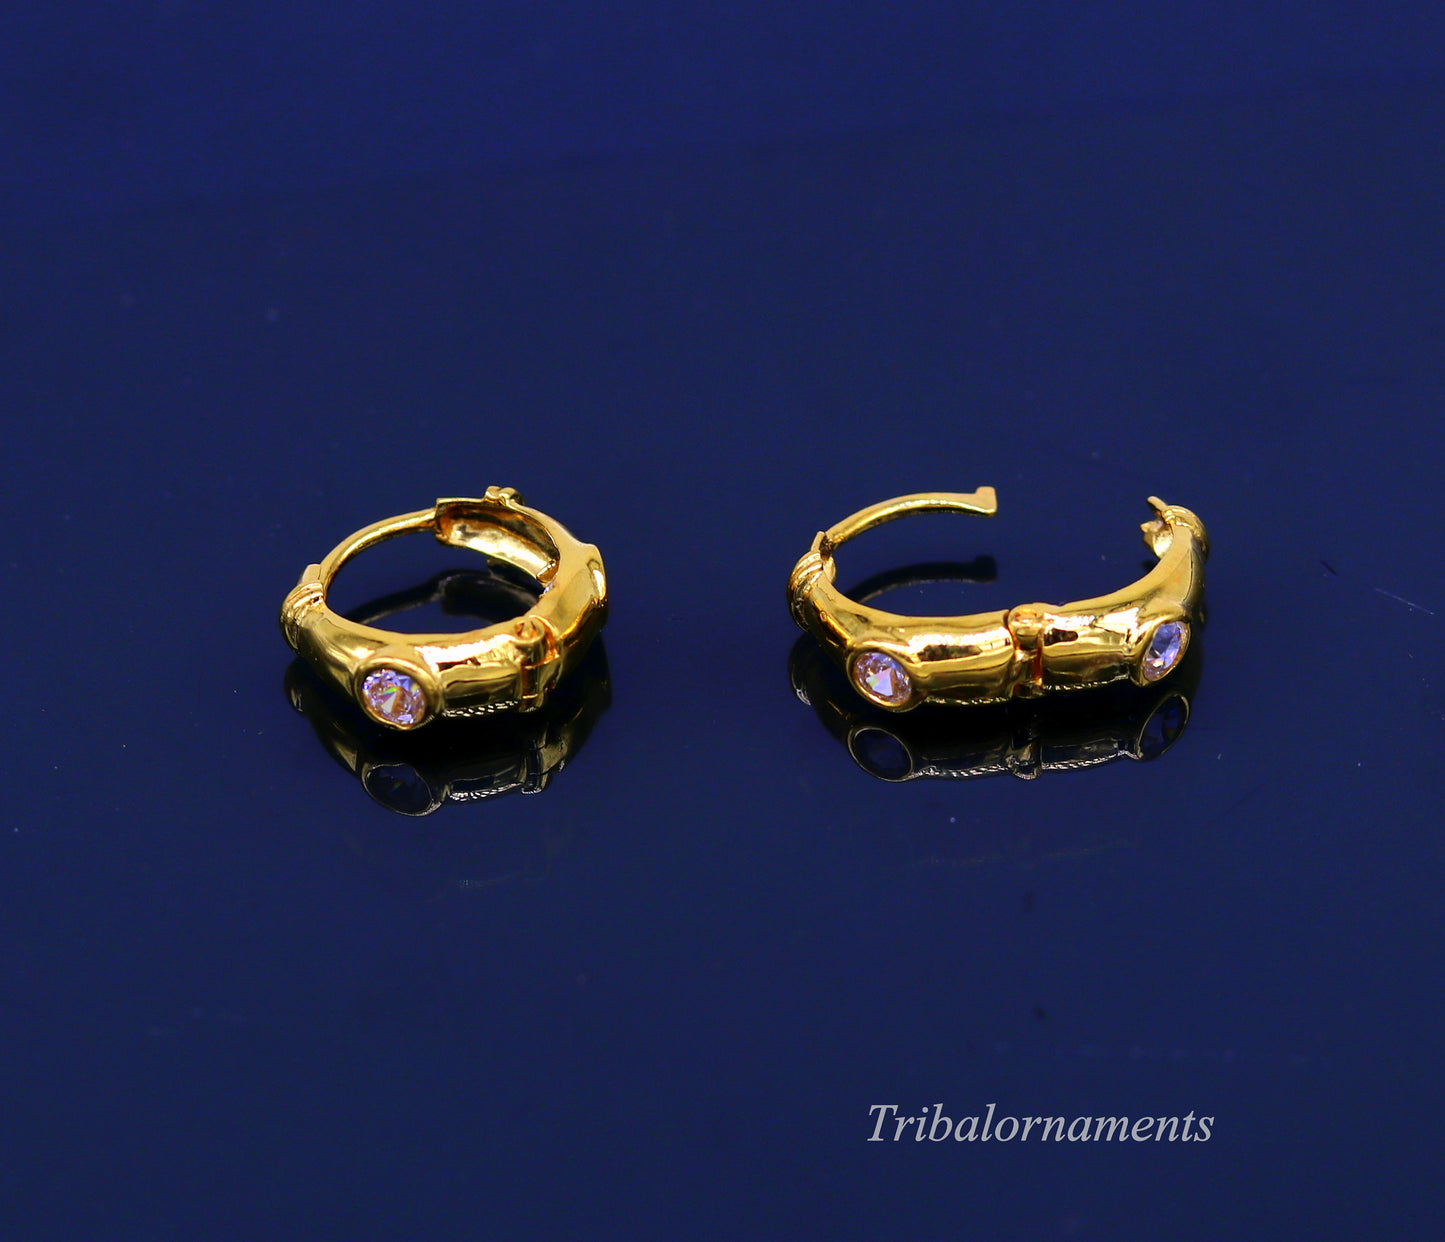 Vintage design 18kt yellow gold handmade fabulous hoops earring bali, amazing customized gifting unisex tribal jewelry ho44 - TRIBAL ORNAMENTS